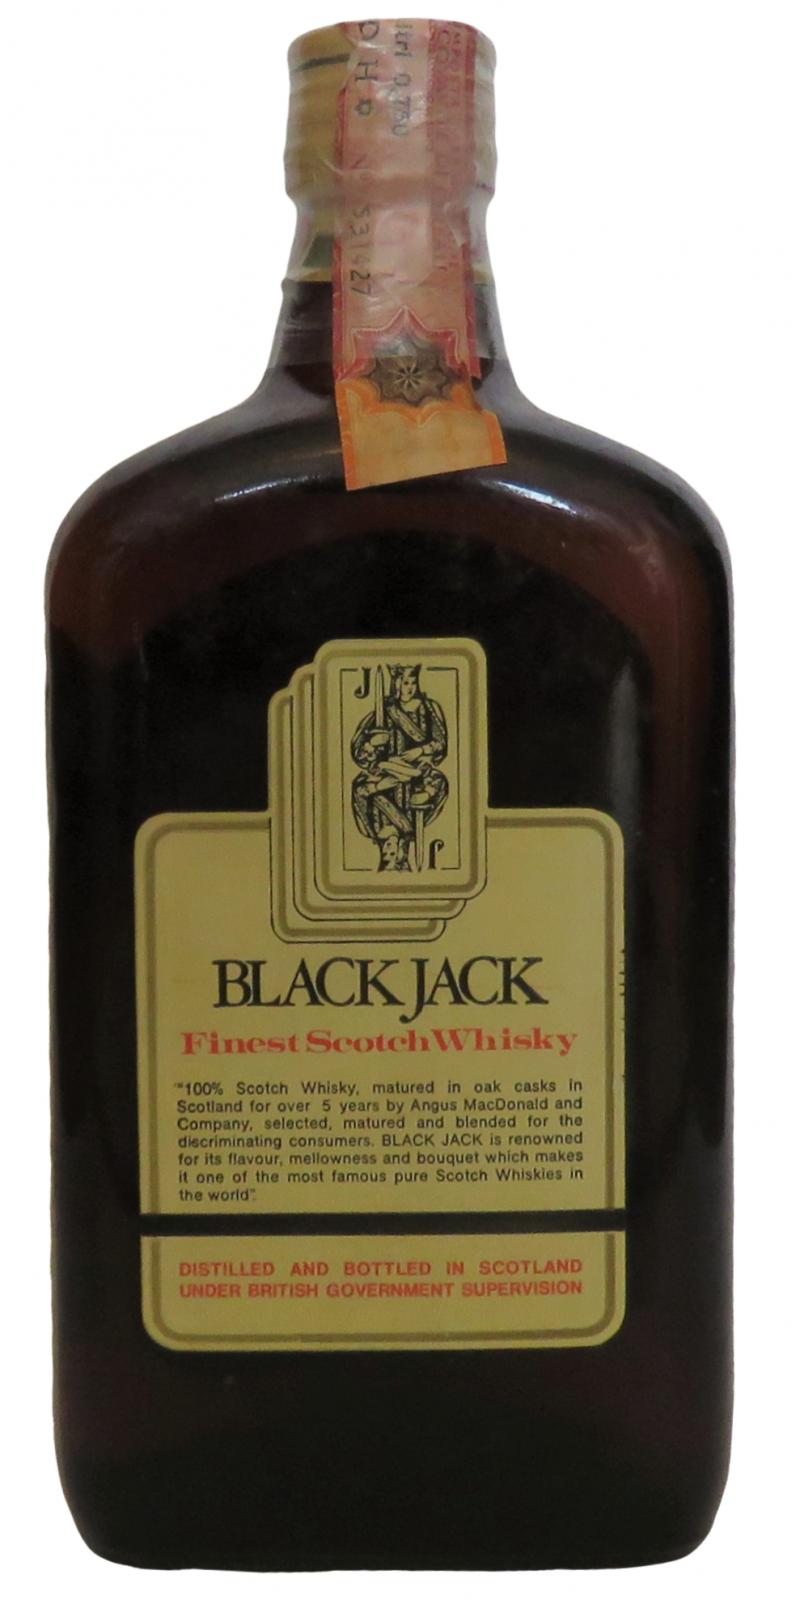 Black Jack 05-year-old